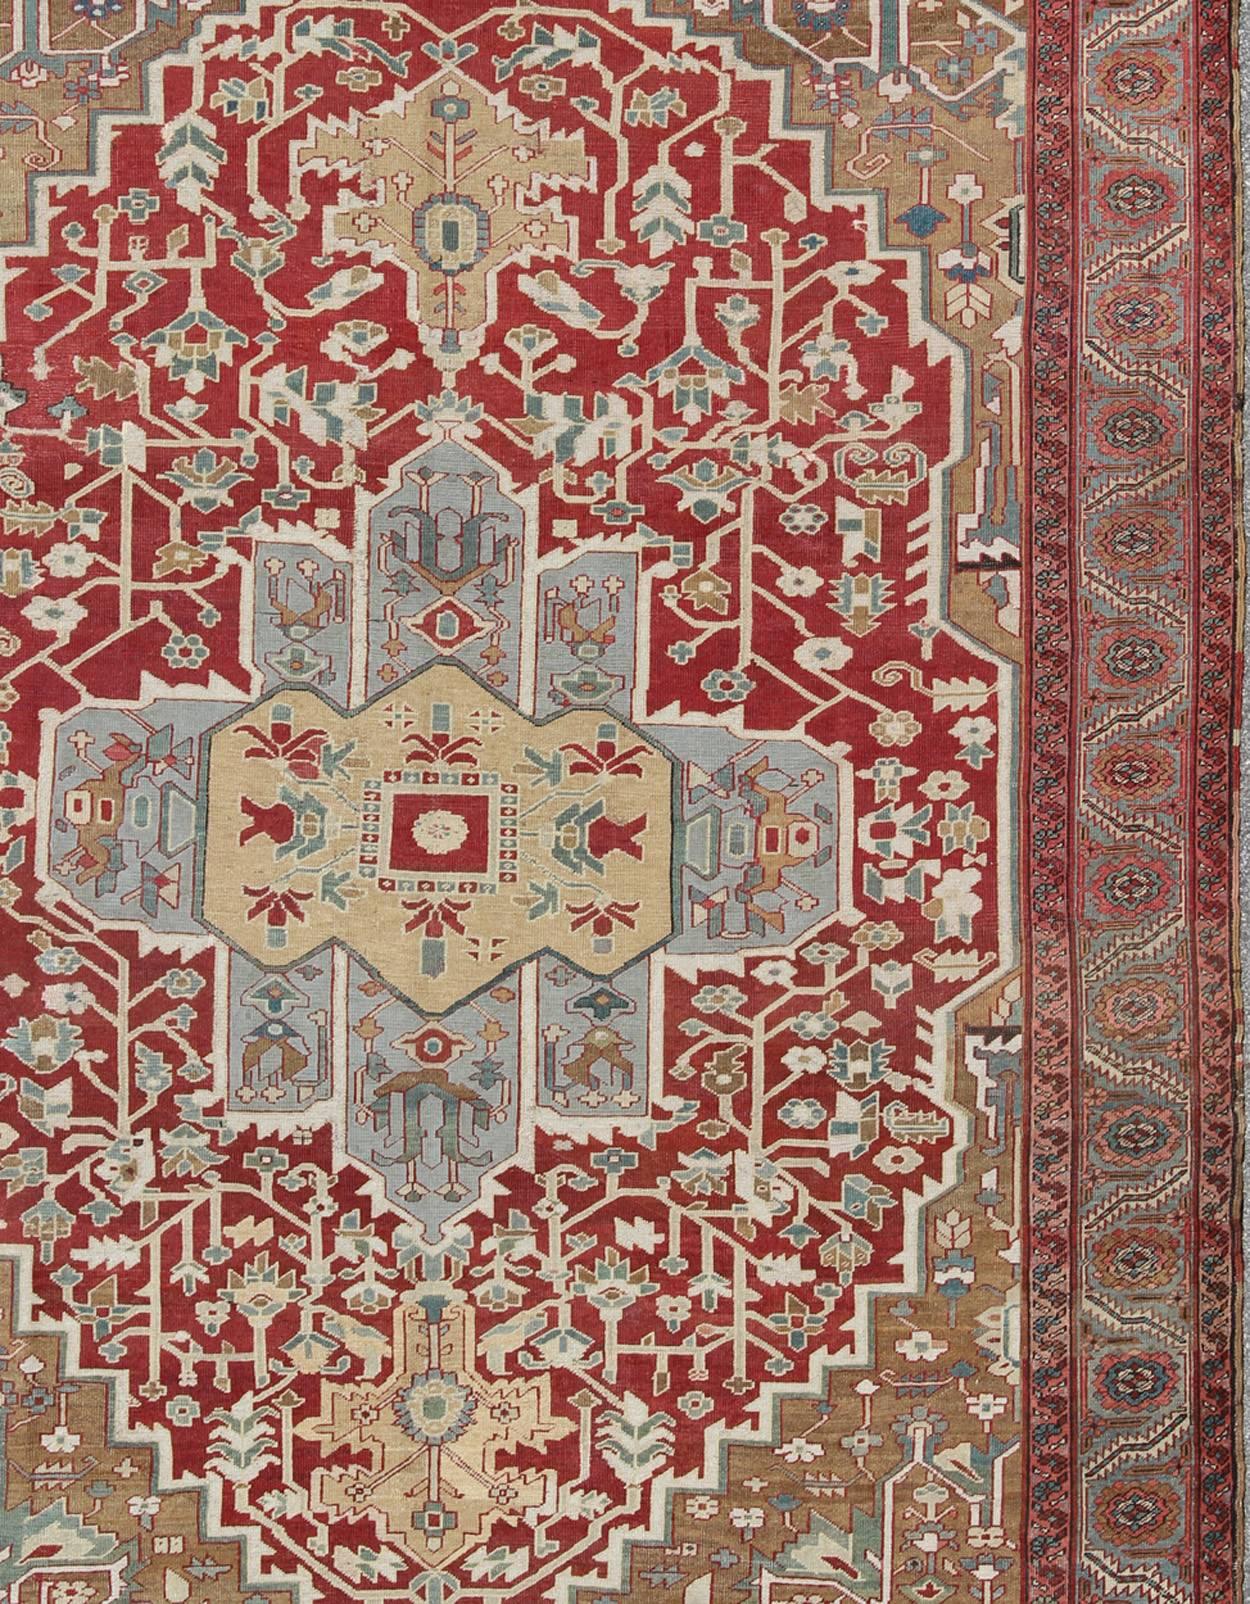 Bakshaish Antique Persian Serapi/Bakhshaiesh Rug in Brick Red, Light Blue & Camel Colors